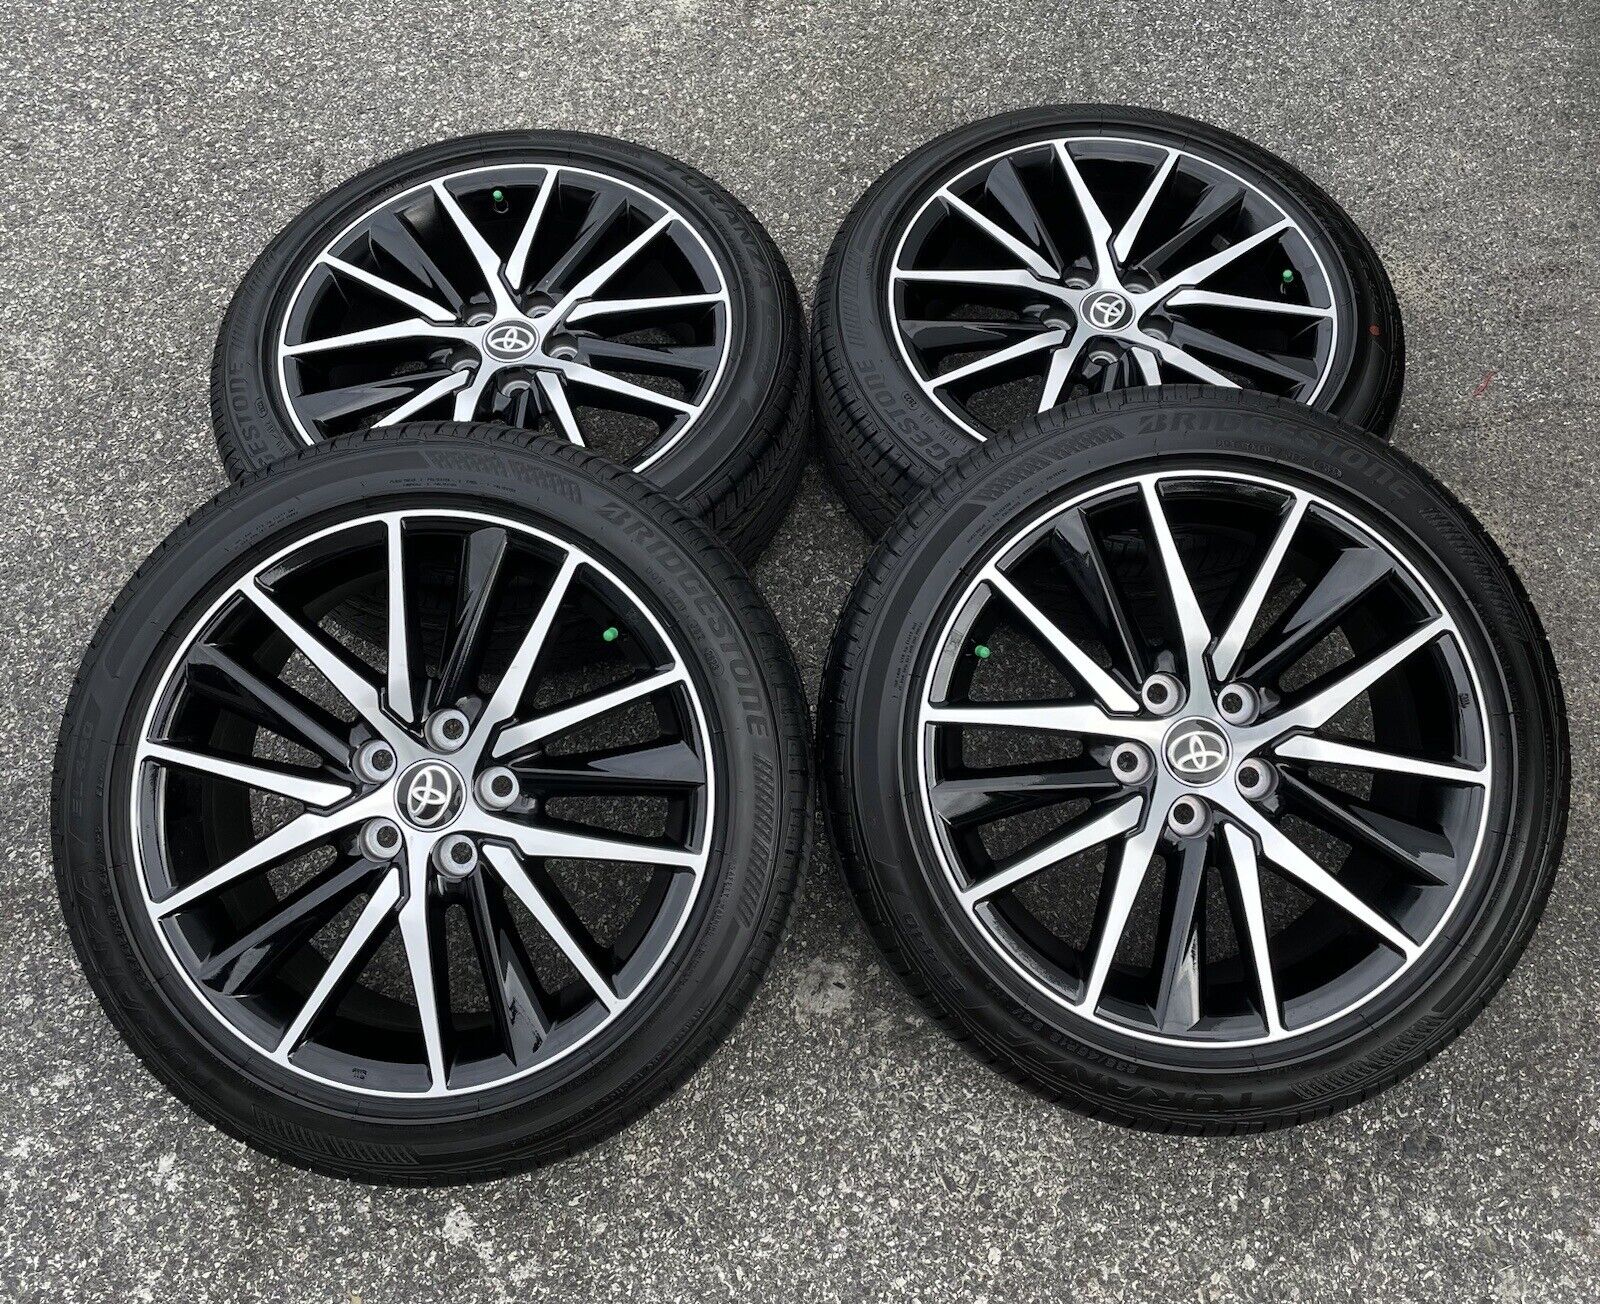 New 2023 18” Toyota Camry Avalon Black Wheels Rims Tires 2022 2021 2020 69133A